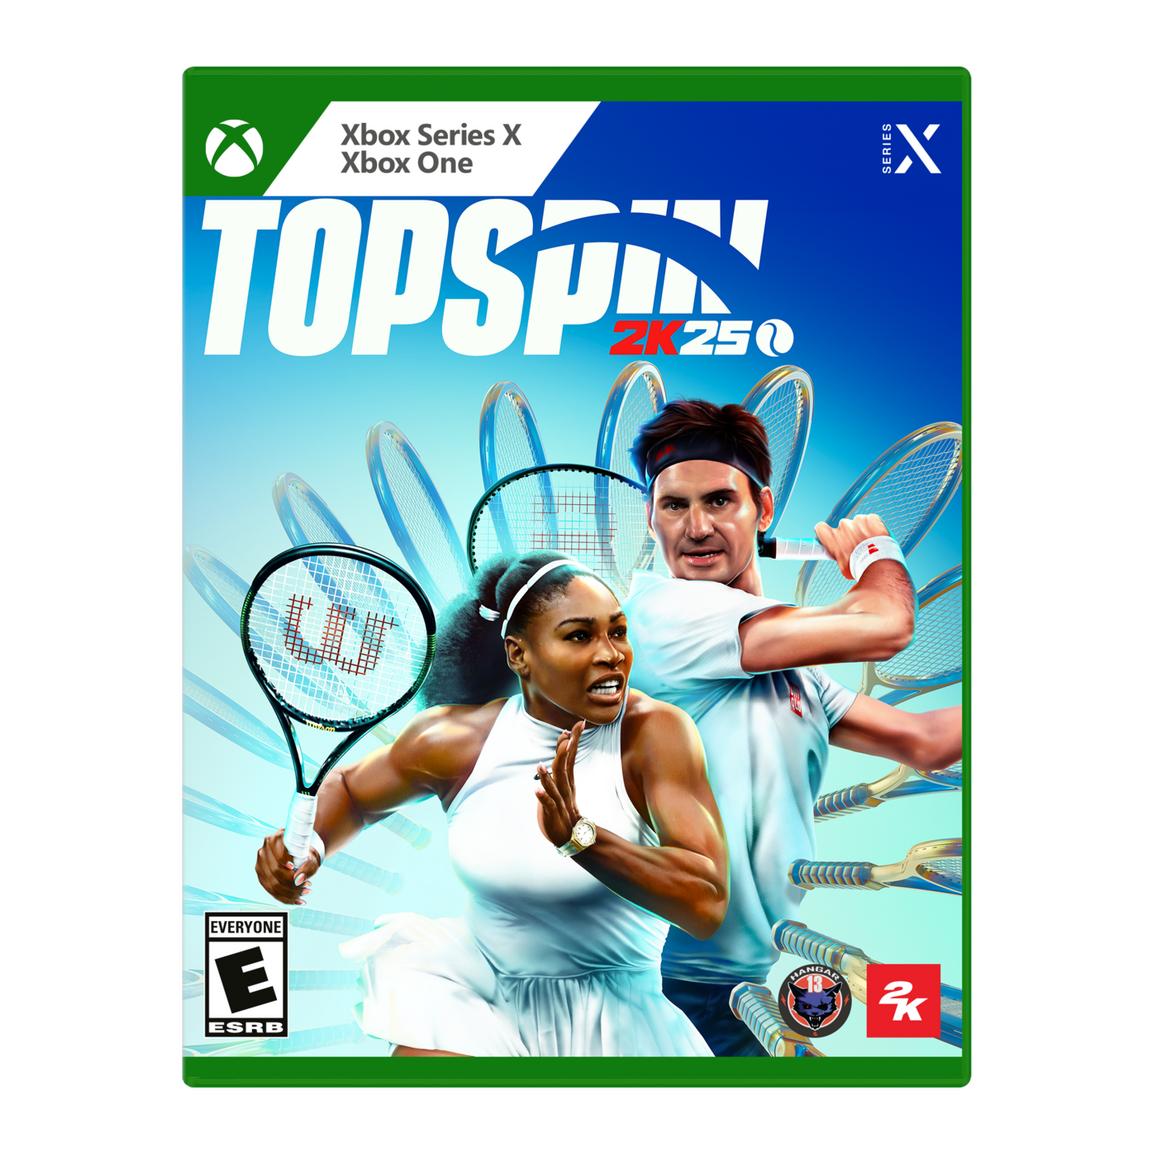 Видеоигра TopSpin 2K25 - Xbox Series X, Xbox One штауффер рене роджер федерер биография